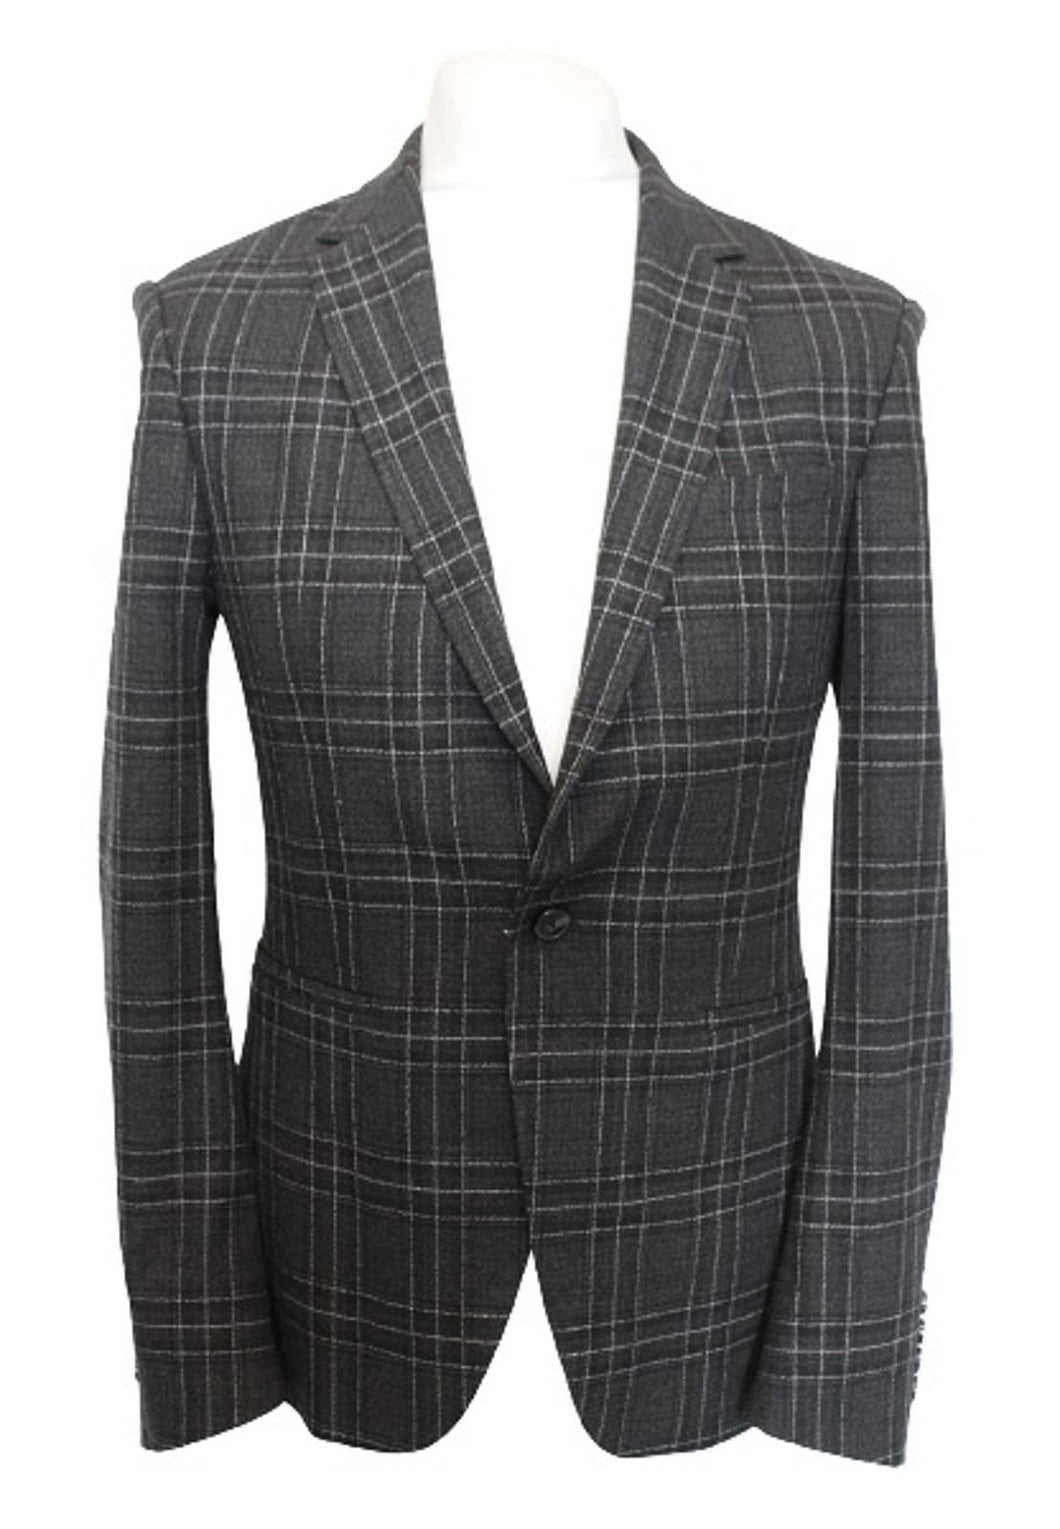 ZARA Men's Dark Grey Checked Single Breasted Stretch Suit Jacket EU48 UK38